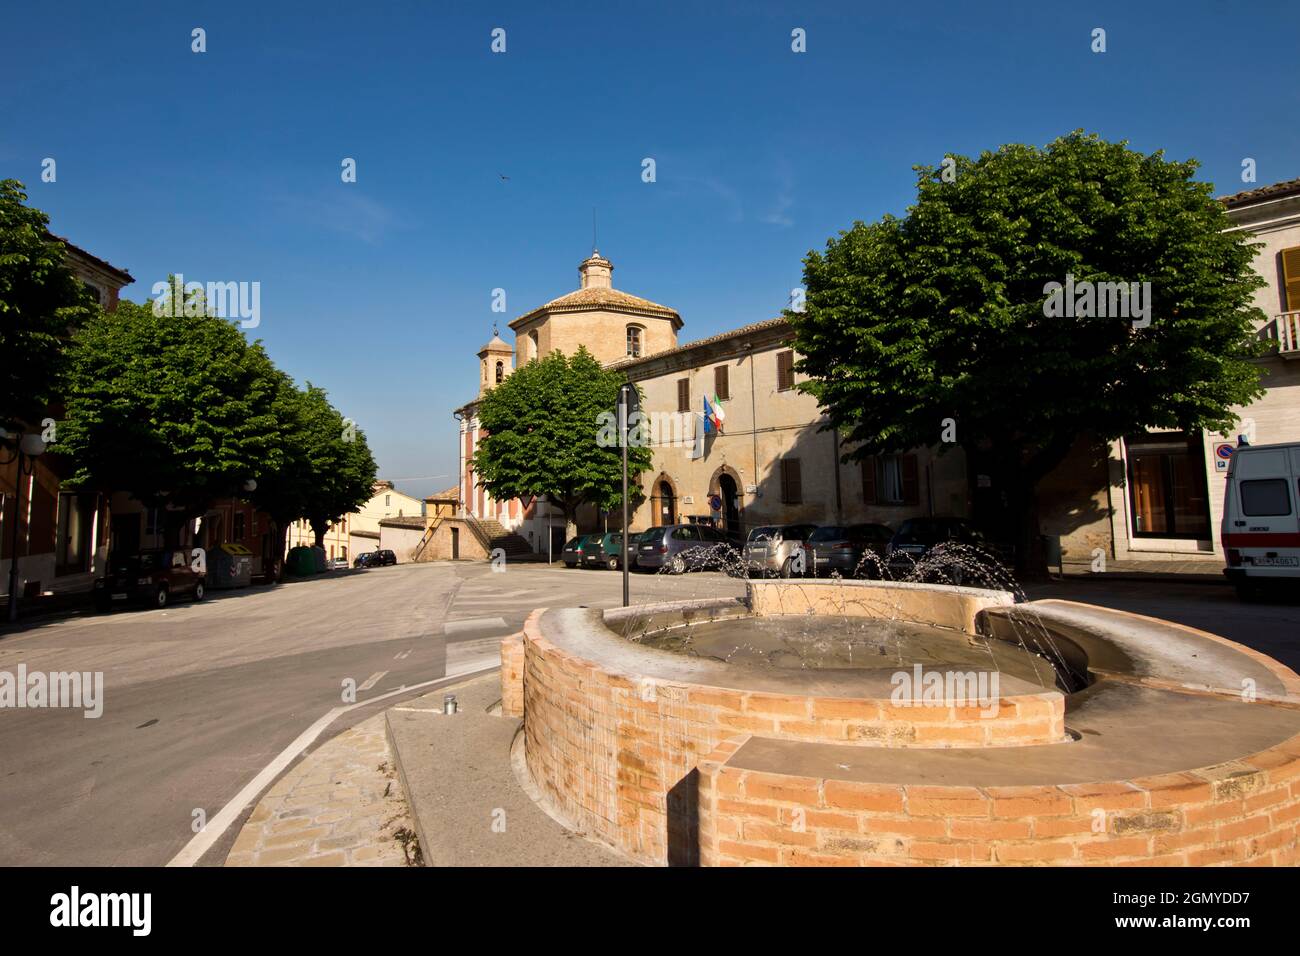 Village, Fortress, Fountain, Montecarotto, Ancona, Marche, Italy, Europe Stock Photo